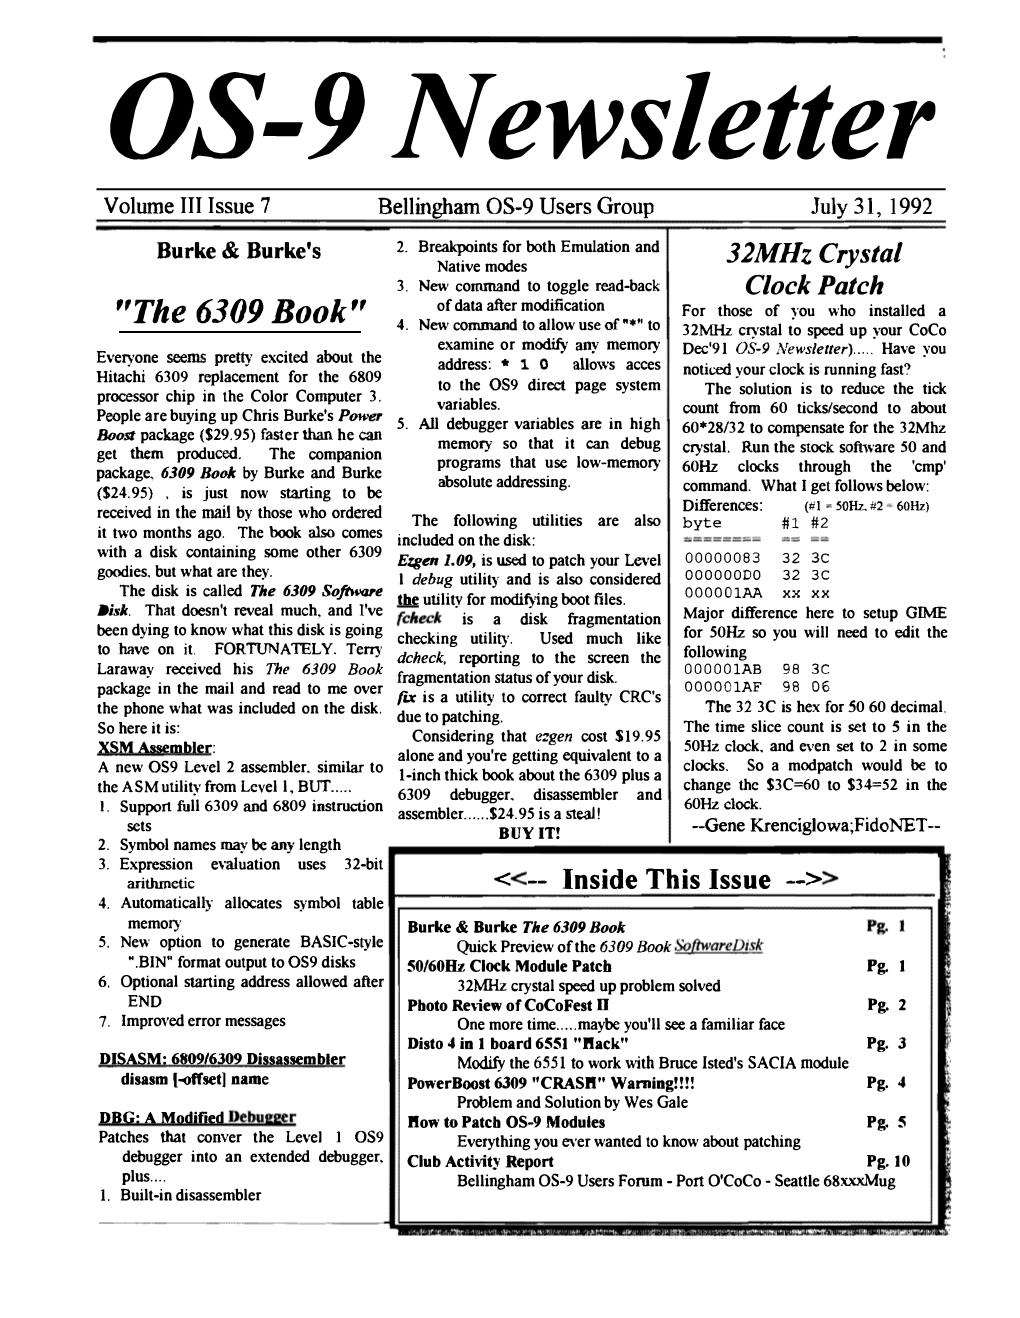 OS-9 Newsletter Volume III Issue 7 Jul 31, 1992